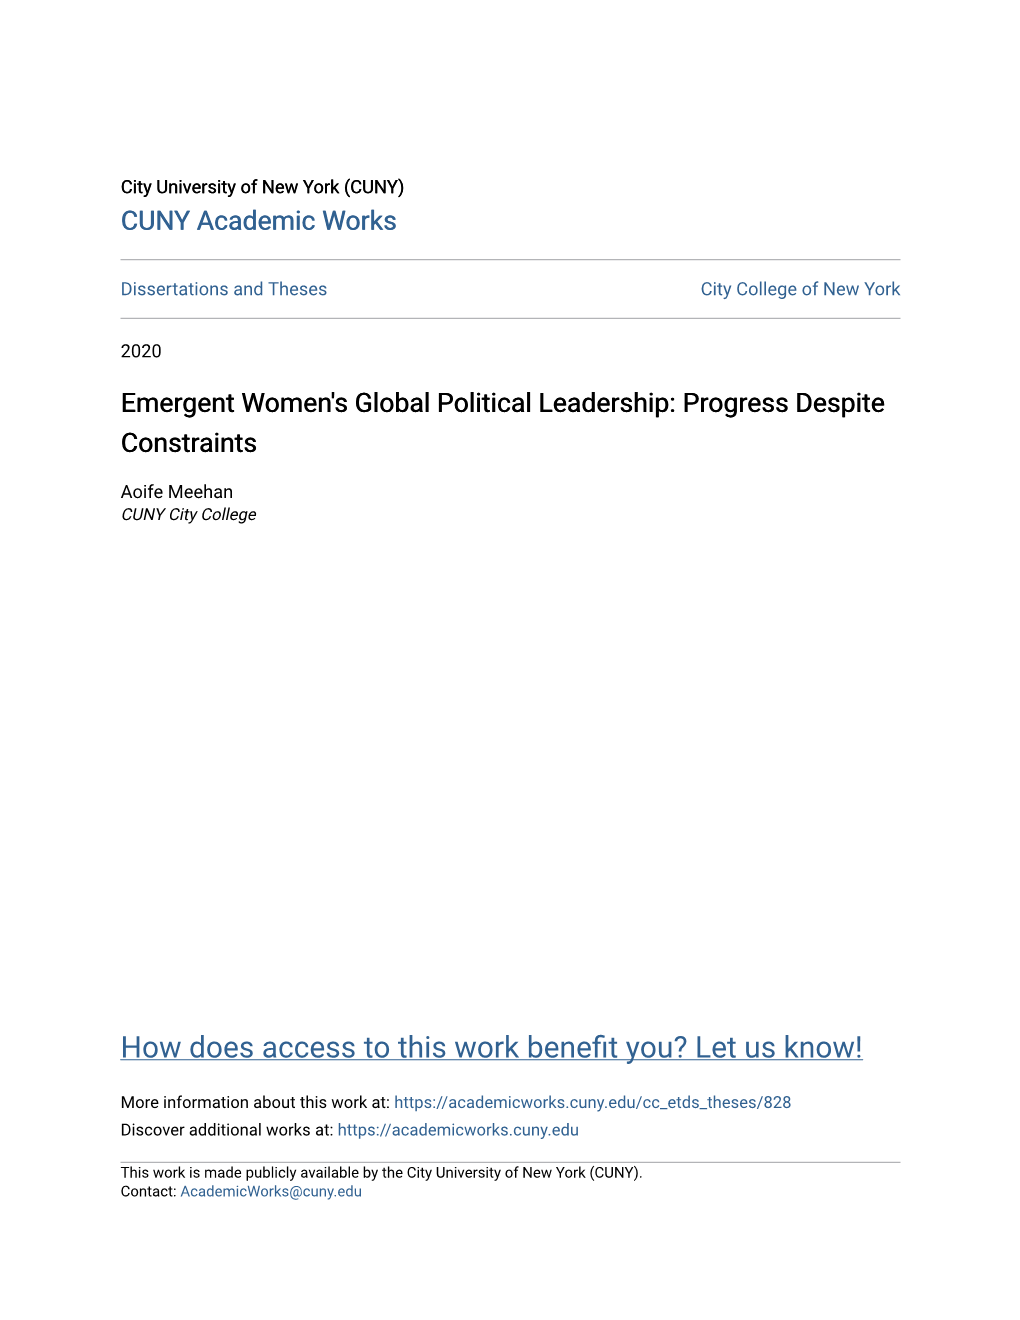 Emergent Women's Global Political Leadership: Progress Despite Constraints